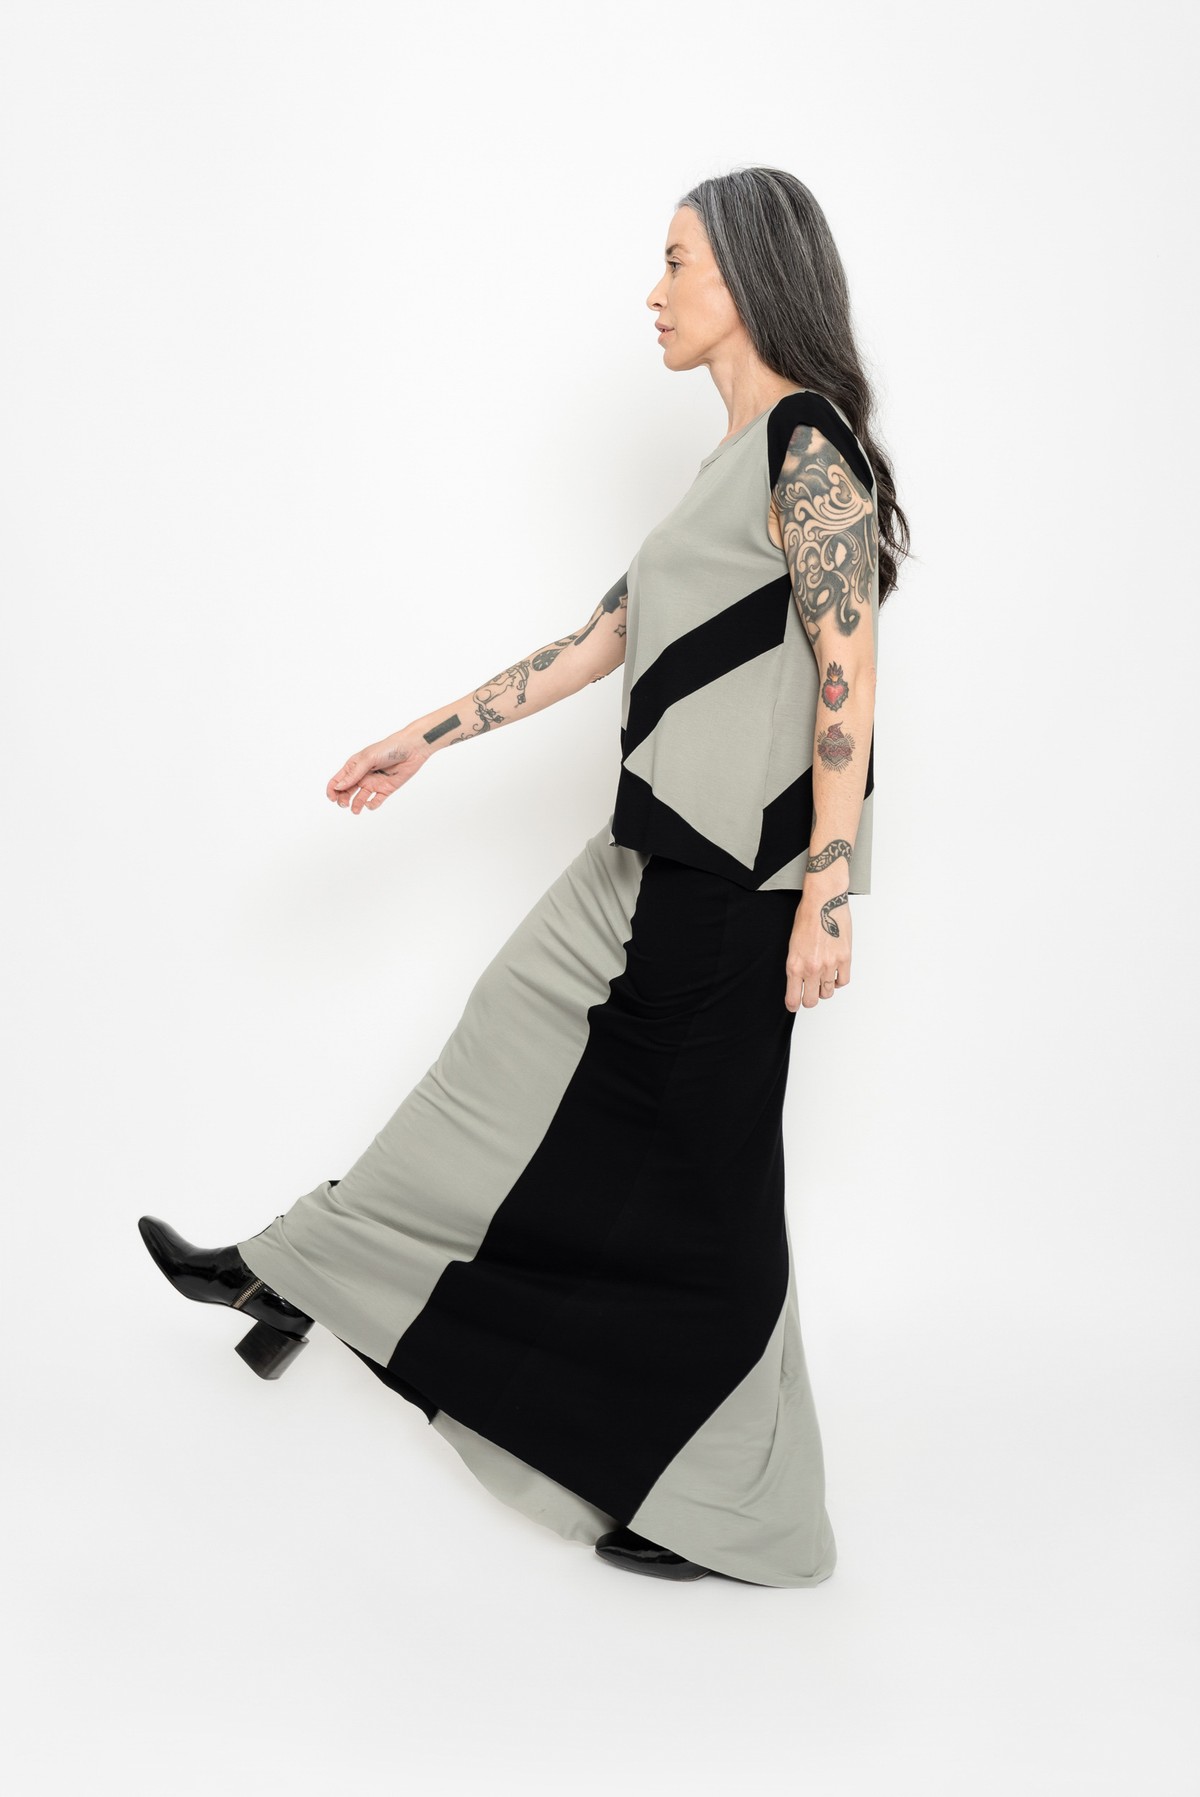 saia longa com recortes | long jersey skirt with cutouts